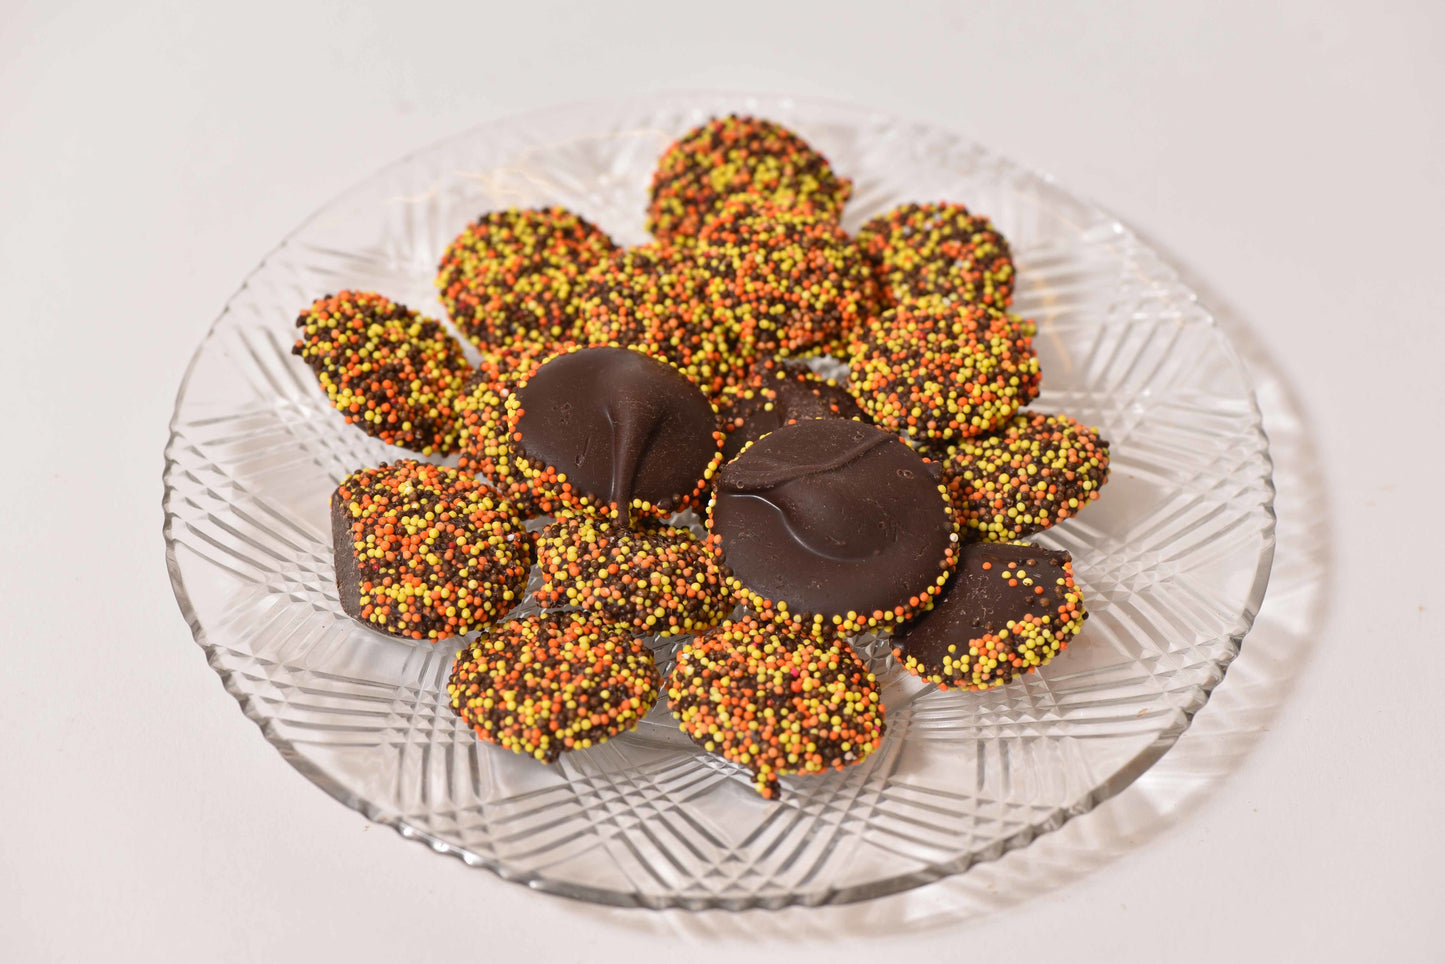 Dark Chocolate Fall Non-Pareils (8 oz) - Conrad's Confectionery